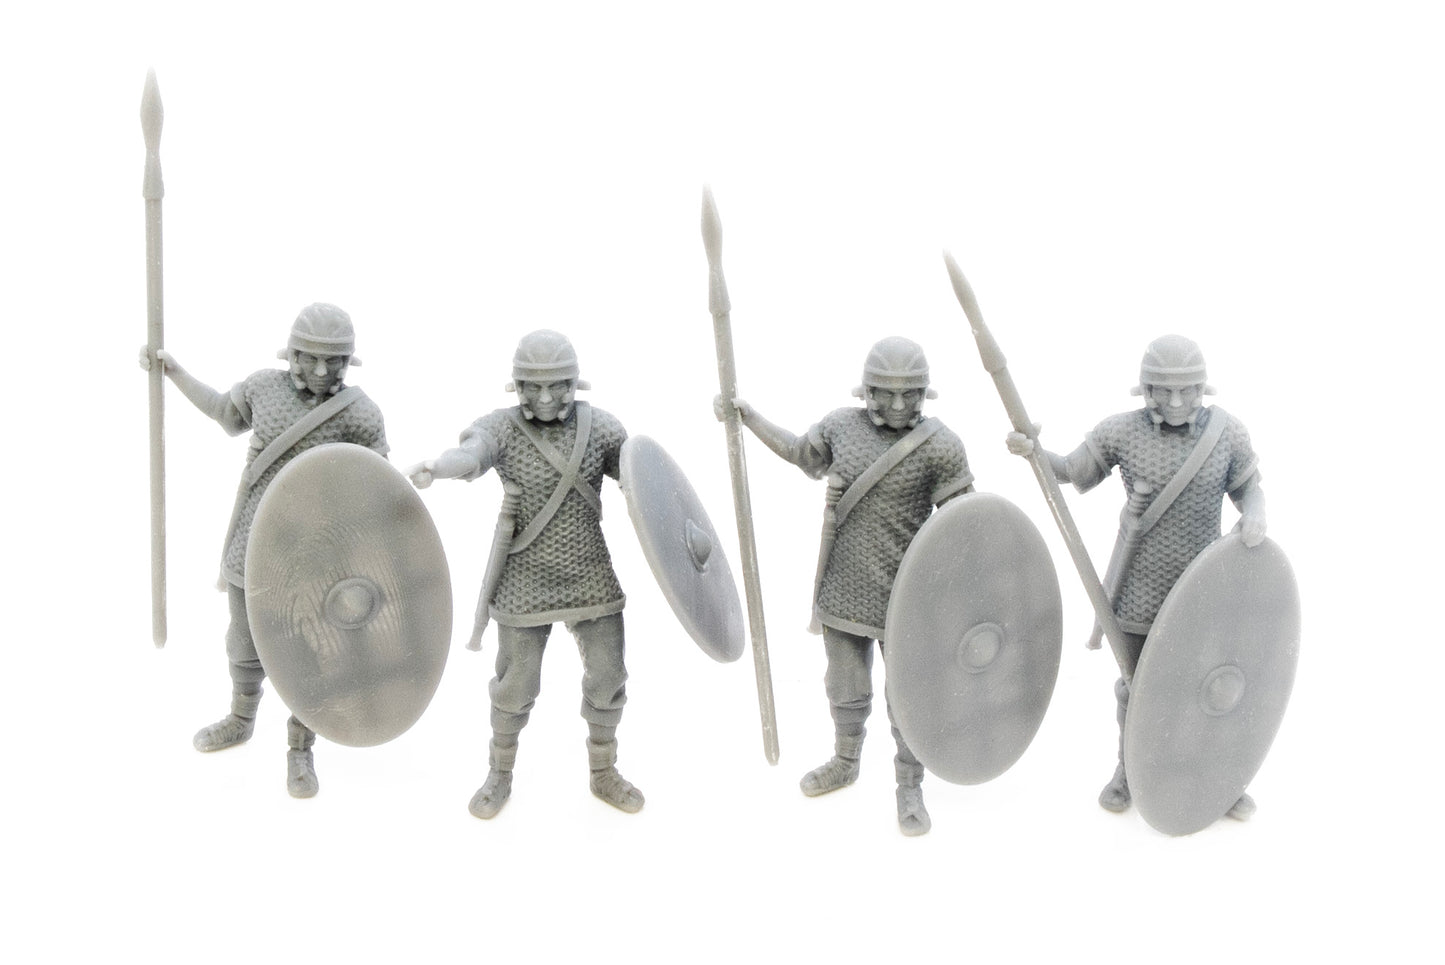 Copy of Eastern Roman Archers